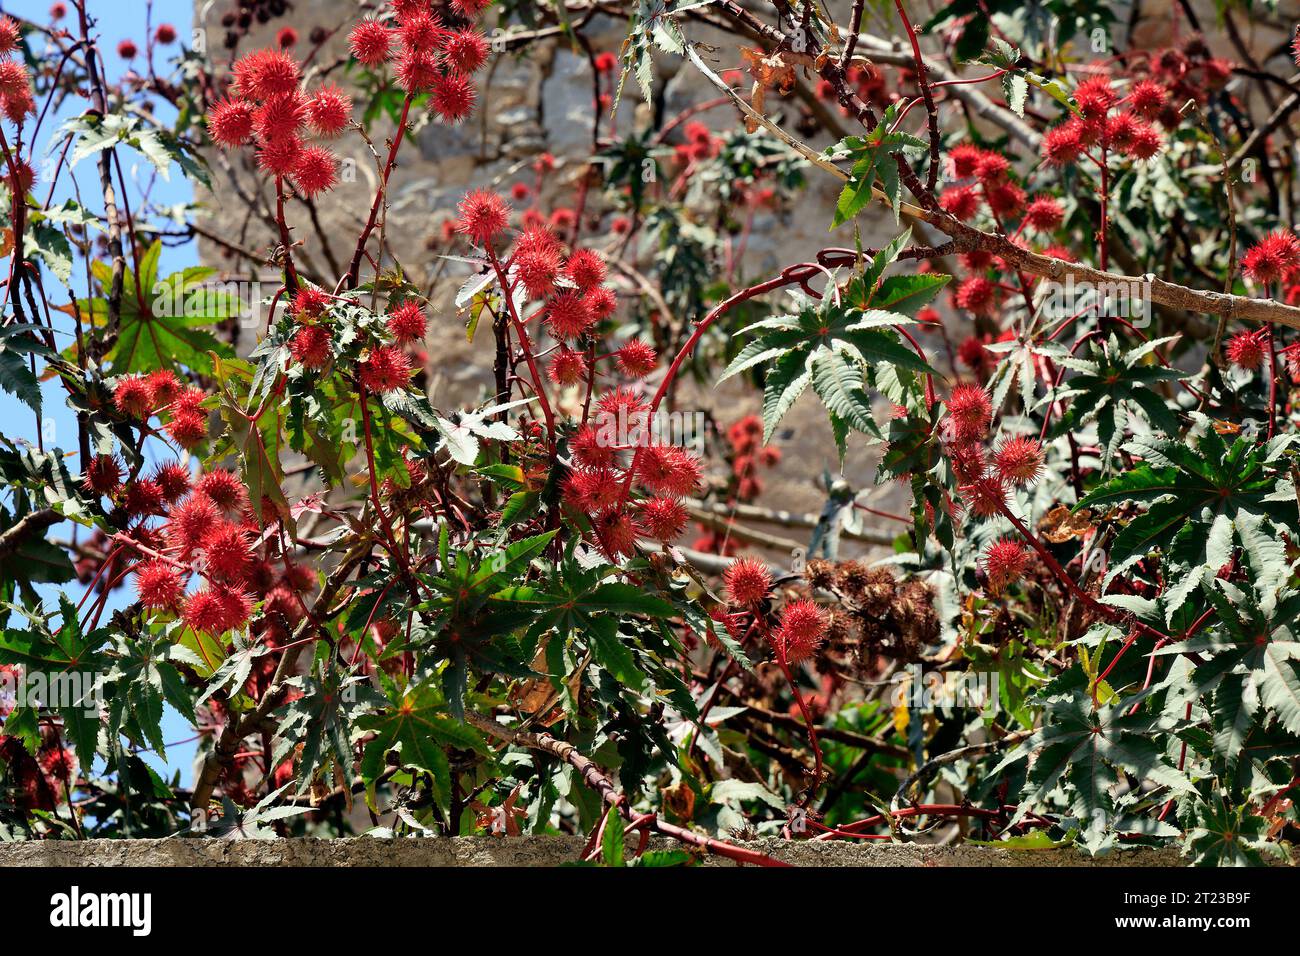 Red spiky fruit - rambutan - (nephelium lappaceum) ripening on a tree, Tilos, Greece. Stock Photo